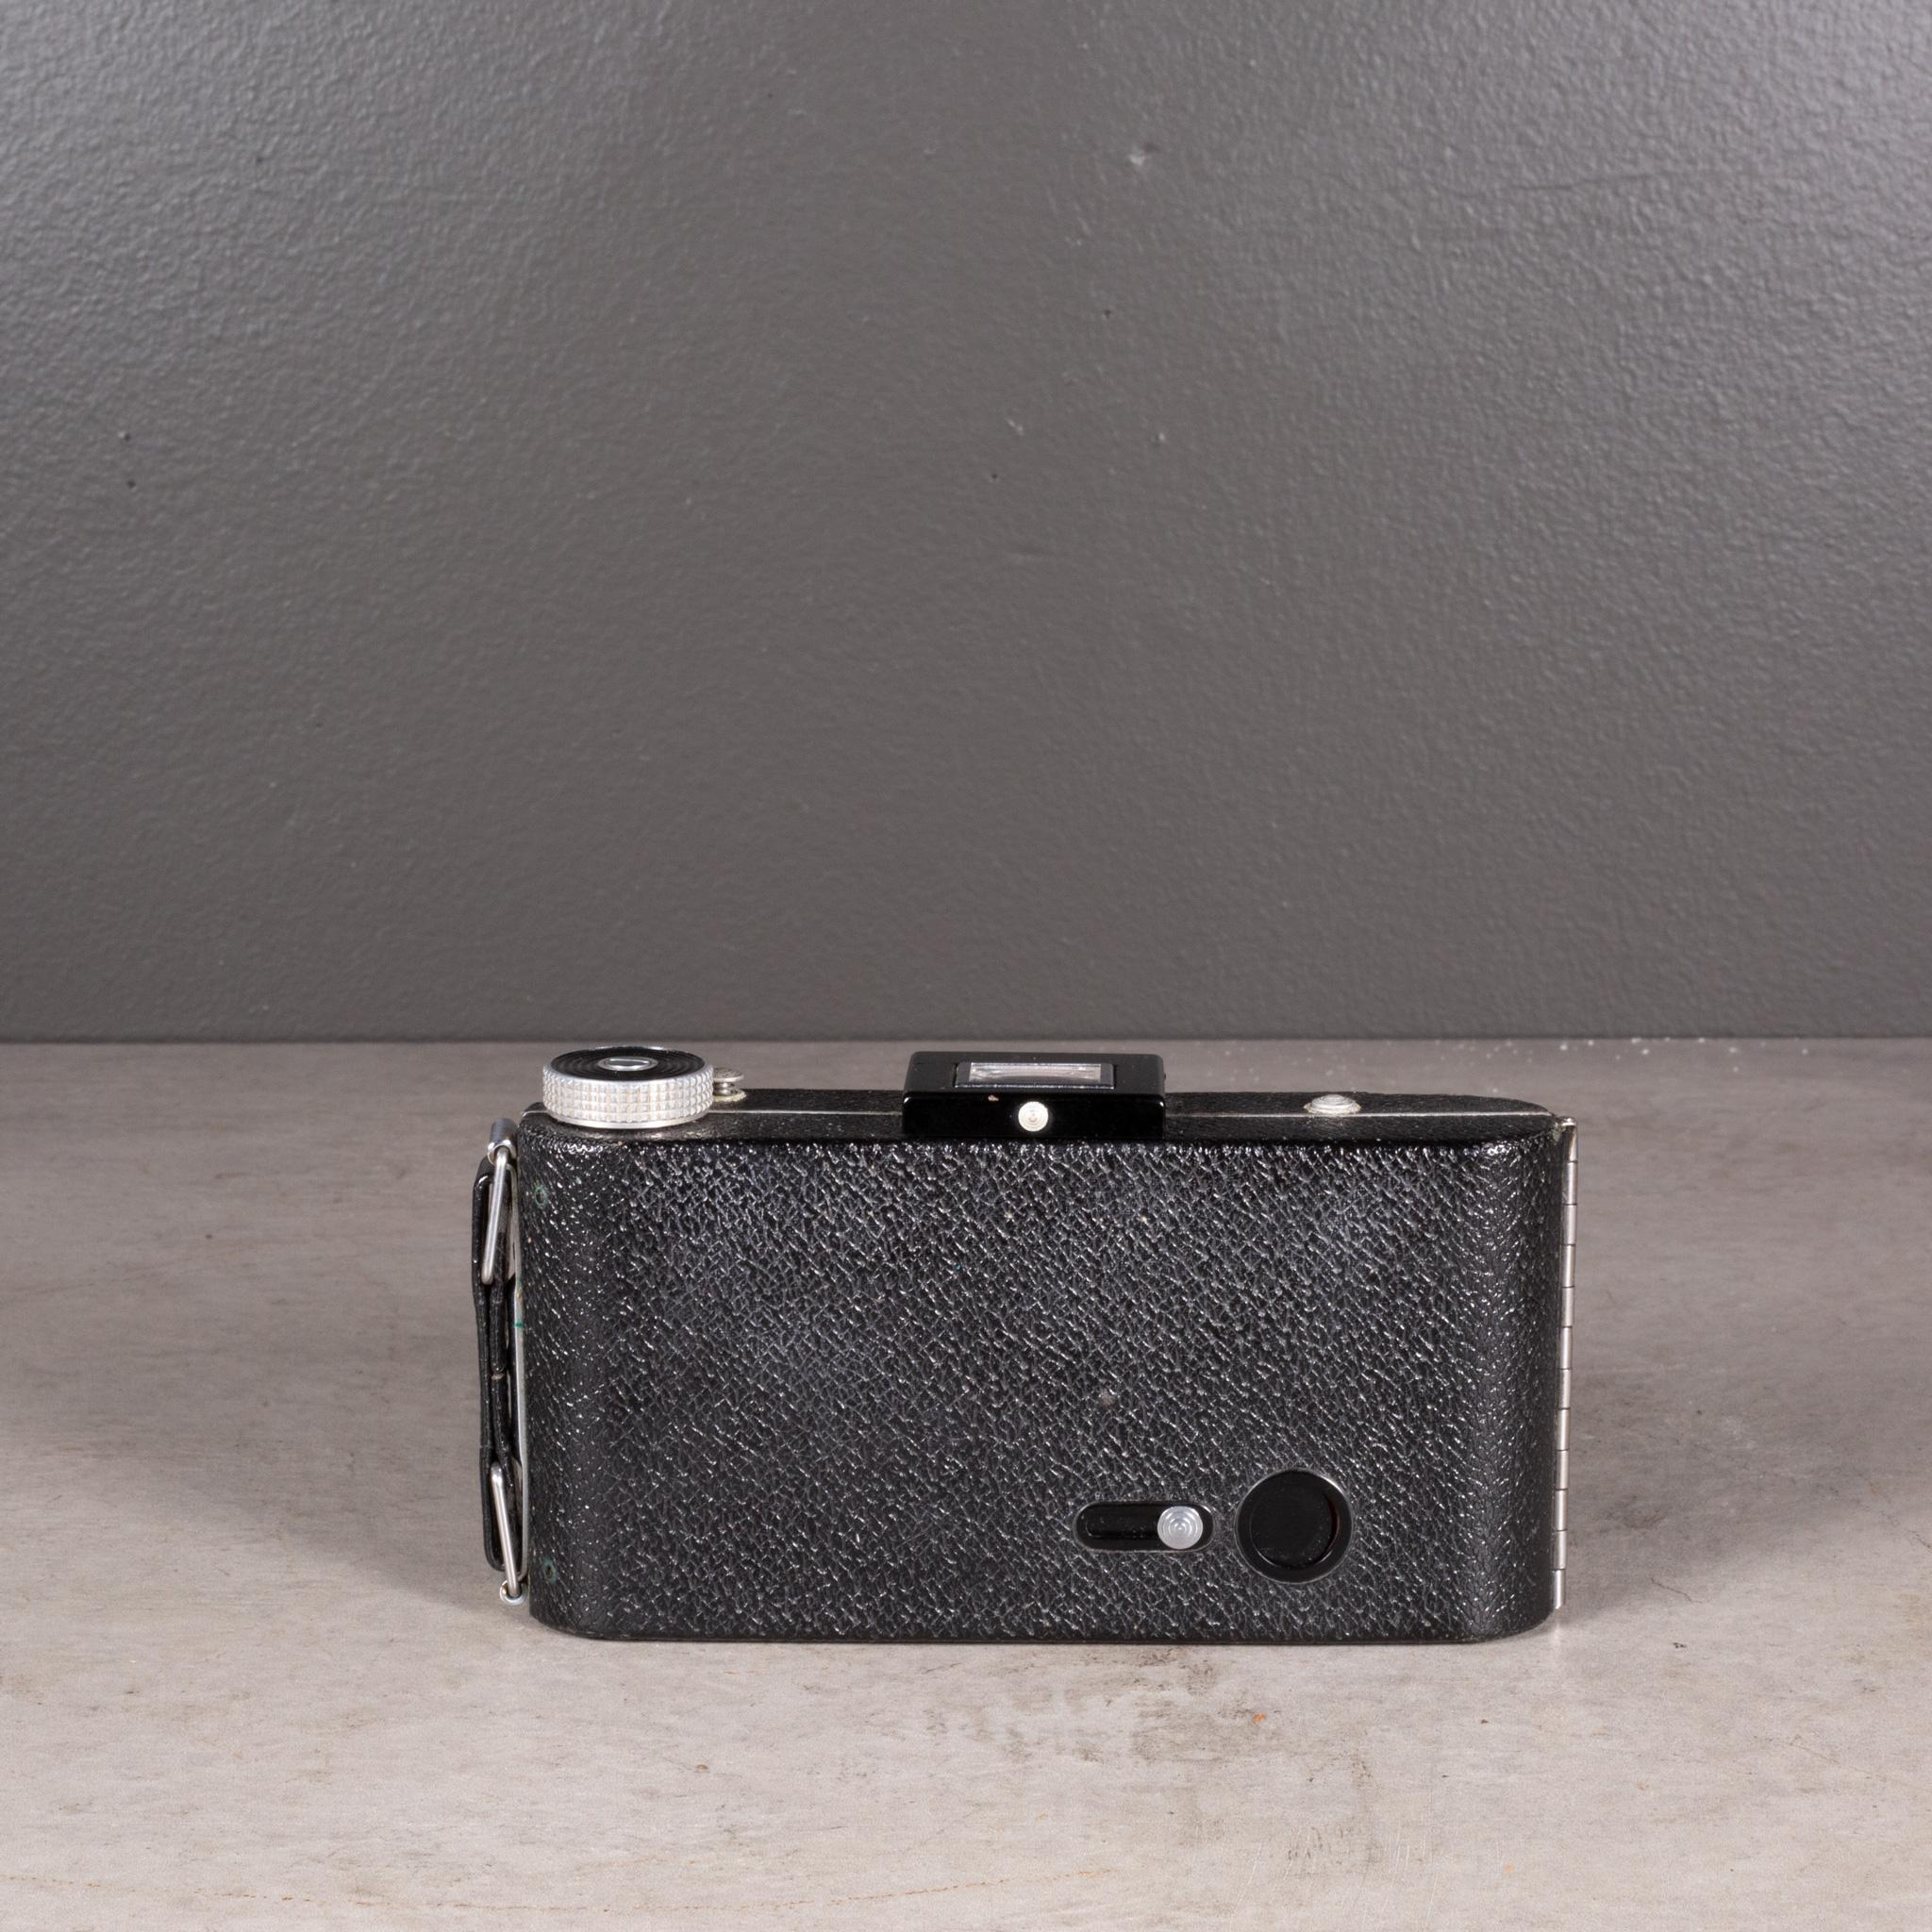 Eastman Kodak ancien appareil photo de poche « N° 1 Kodak » pliant c.1909-1920 en vente 2